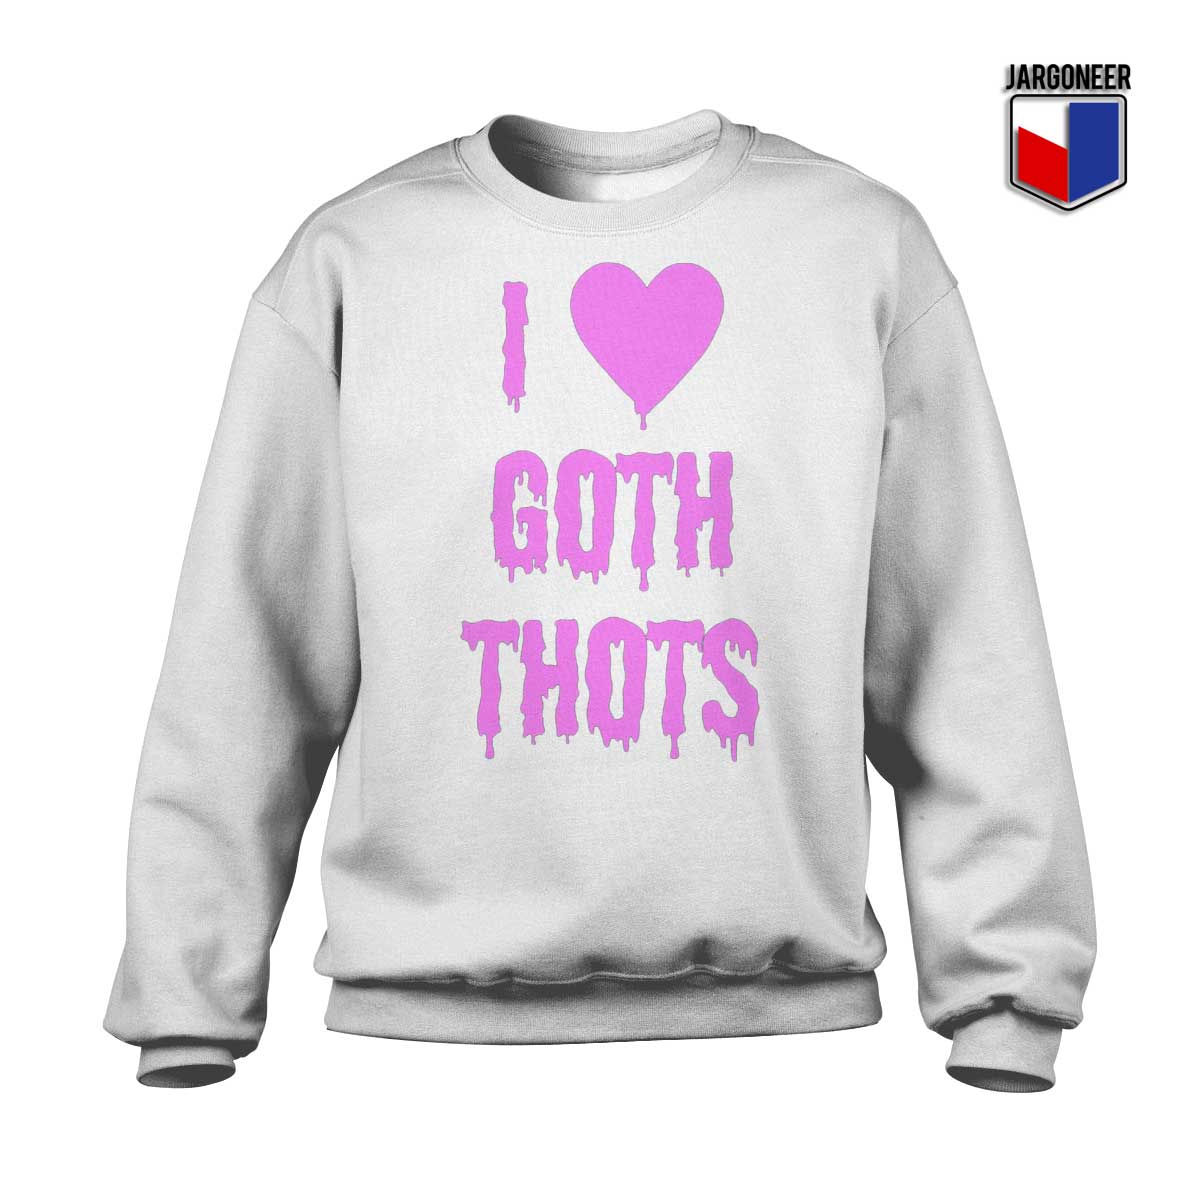 I love Goth Thots White Sweatshirt - Shop Unique Graphic Cool Shirt Designs